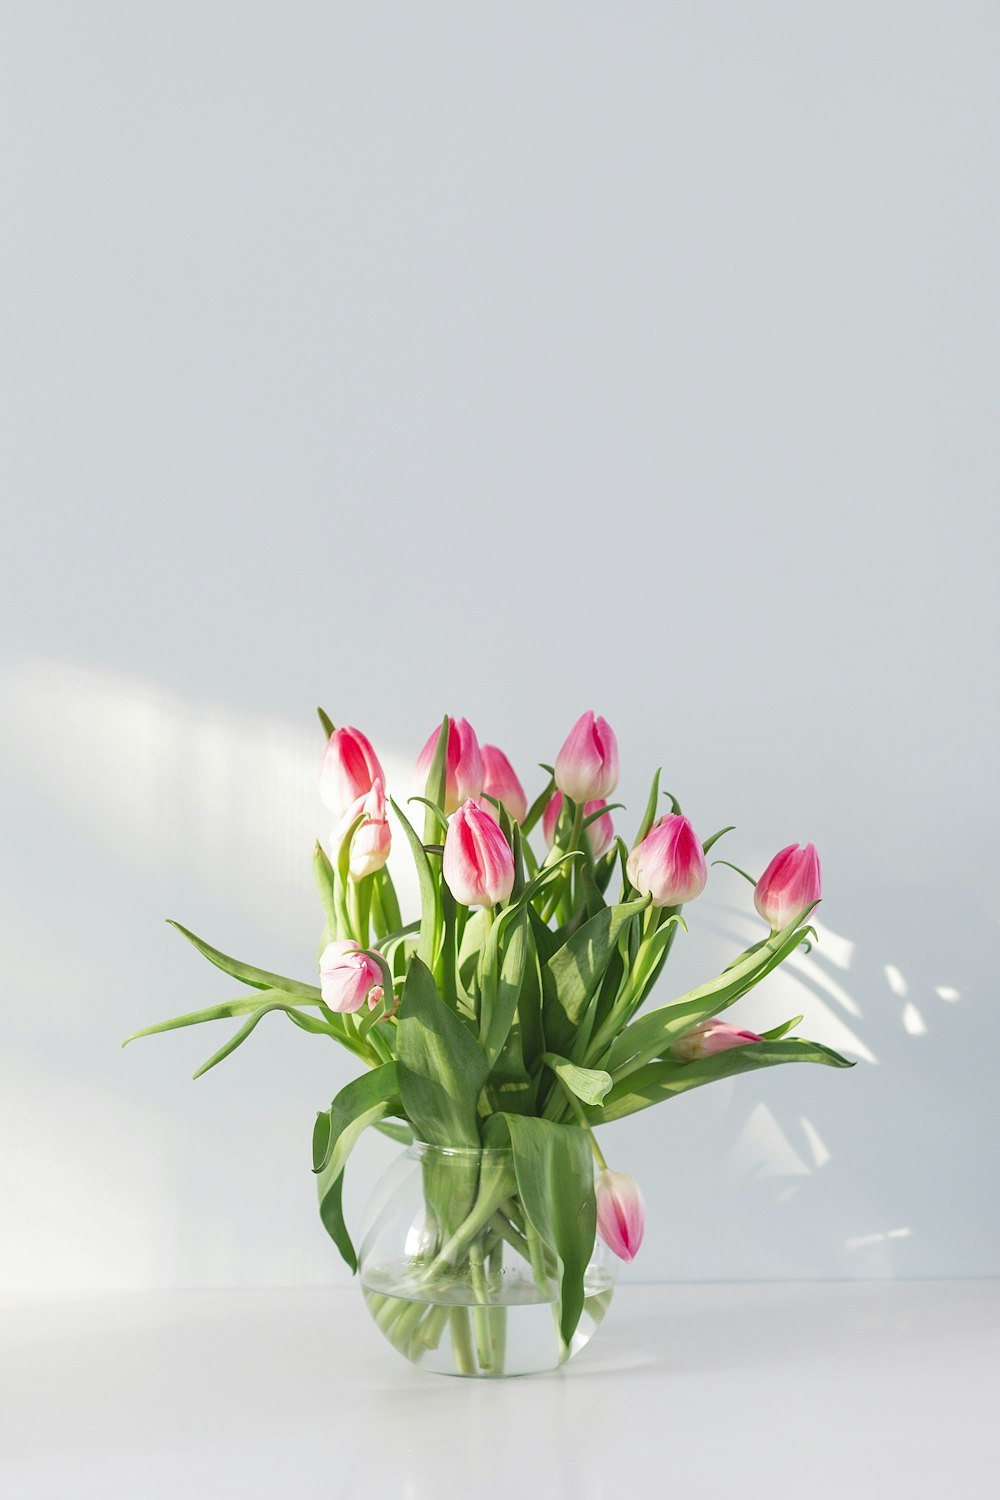 flores cor-de-rosa no vaso